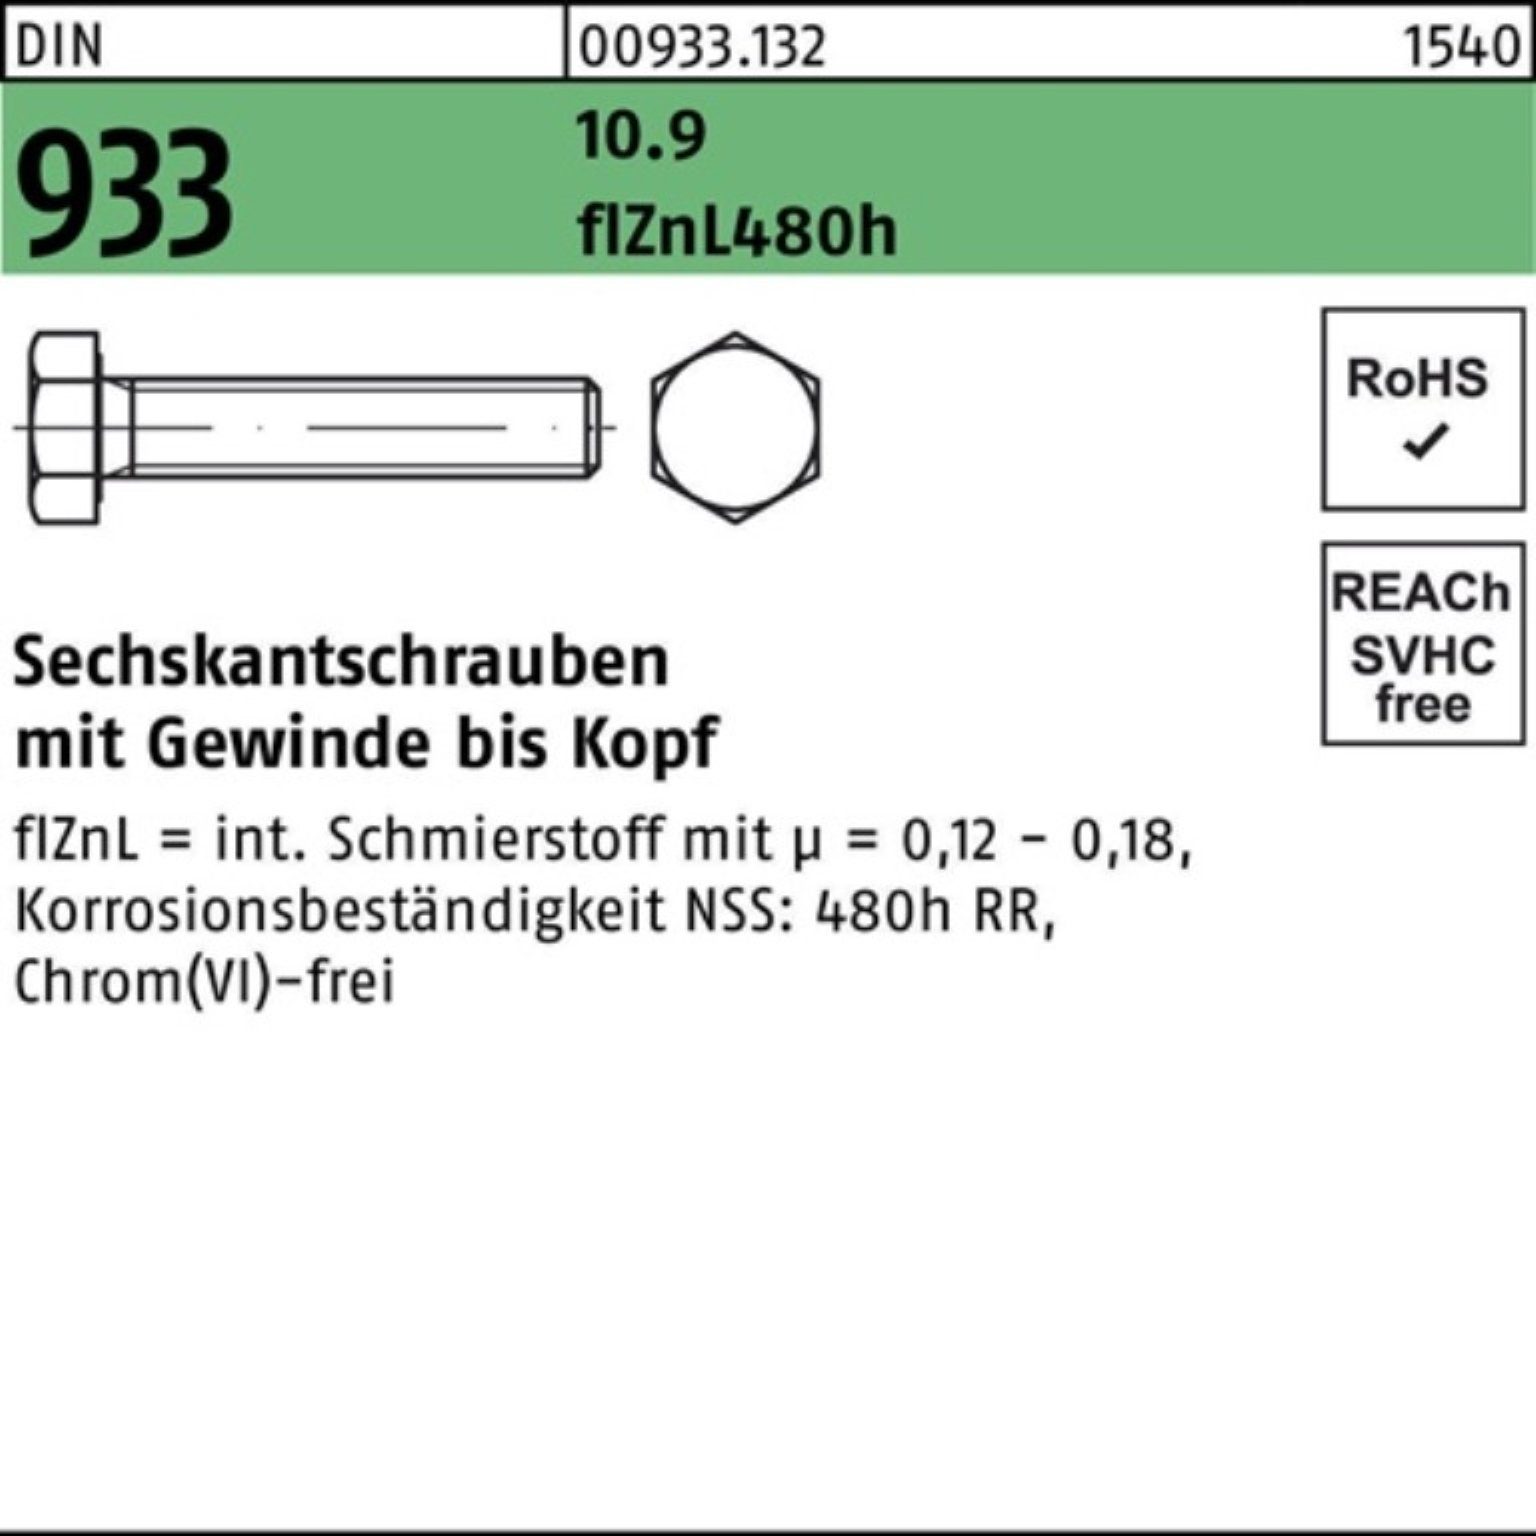 Reyher VG 933 Pack Sechskantschraube flZnL/nc/x/x/480h 200er 10.9 Sechskantschraube DIN 55 M8x